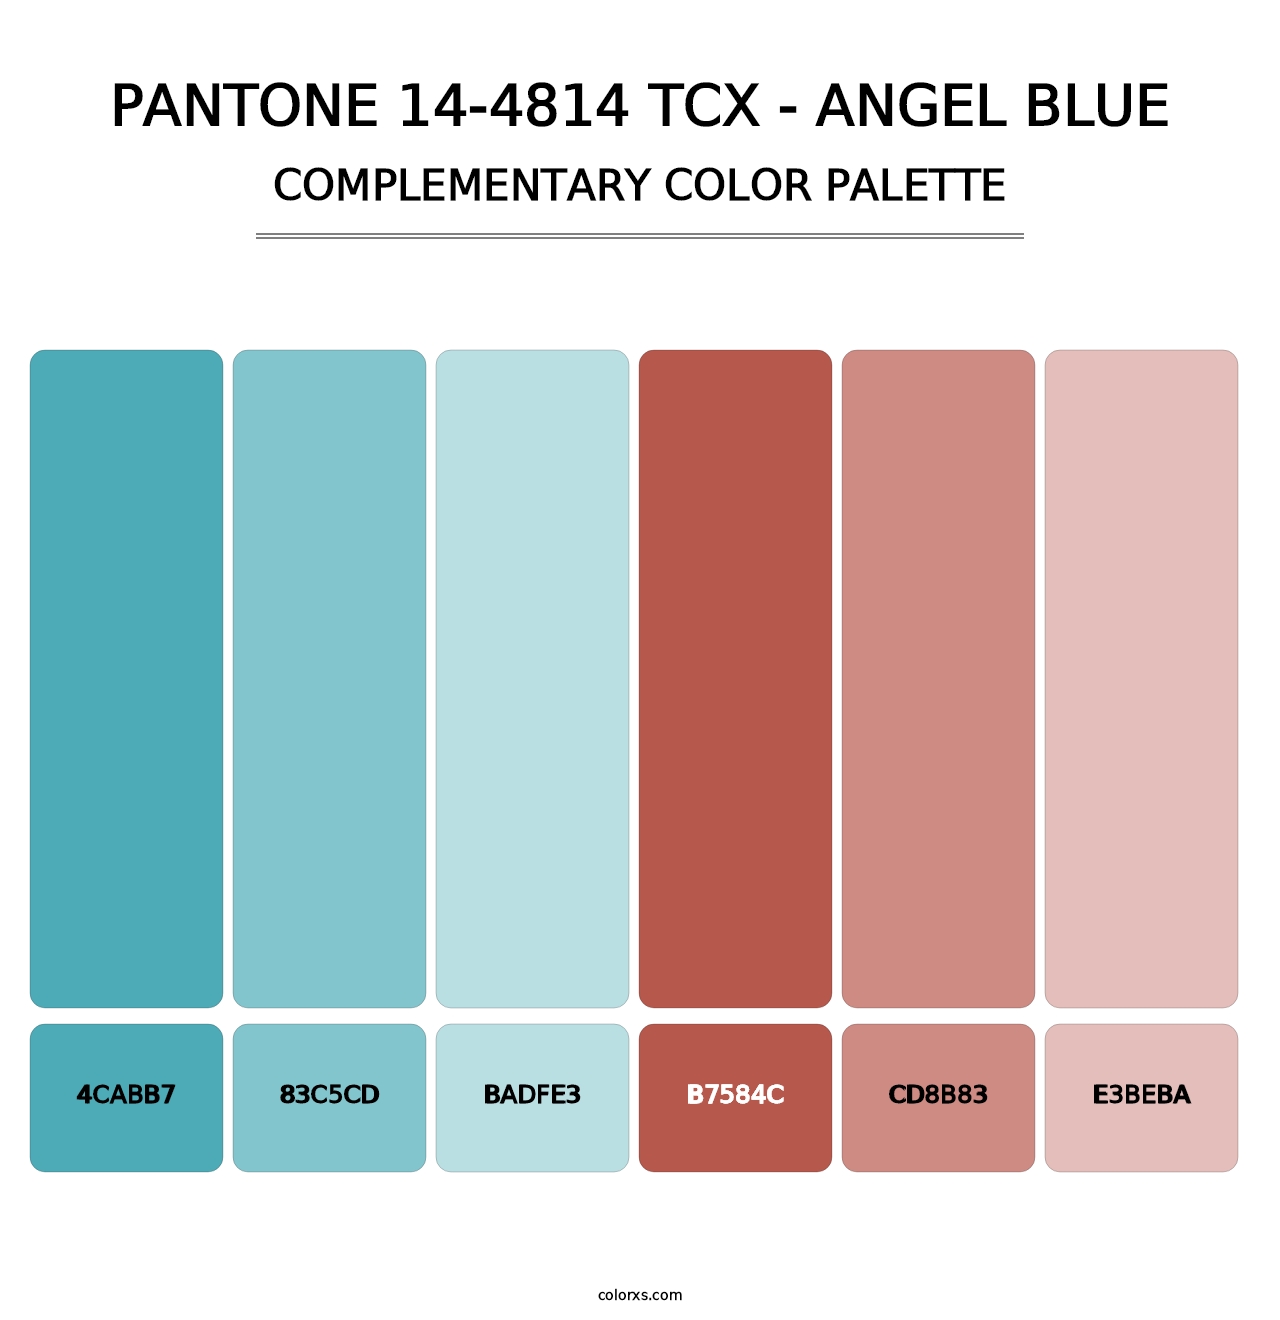 PANTONE 14-4814 TCX - Angel Blue - Complementary Color Palette